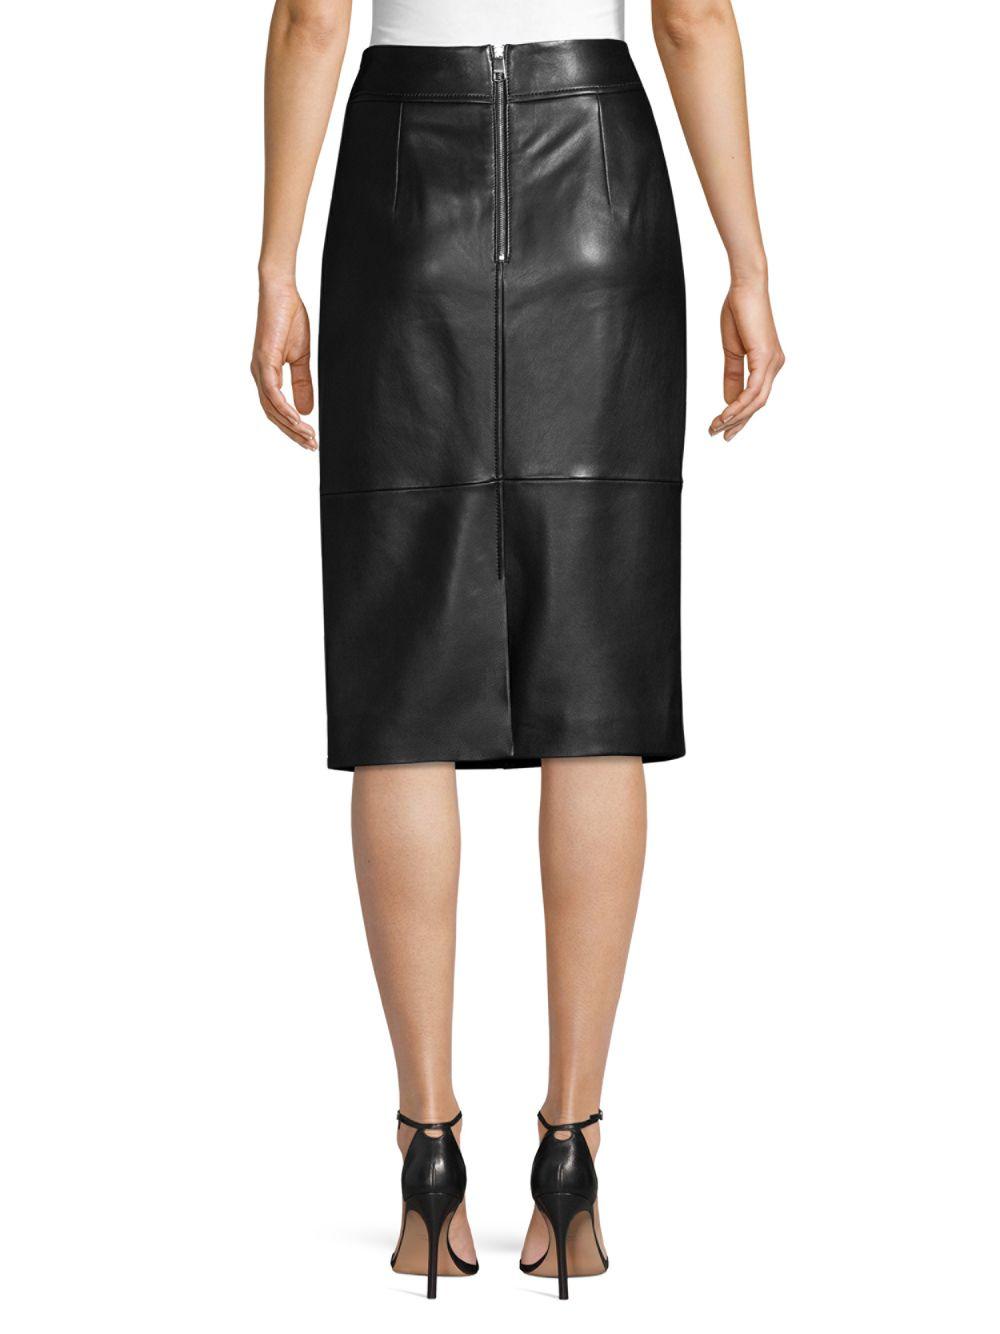 BOSS by HUGO BOSS Selrita Leather Pencil Skirt in Black | Lyst